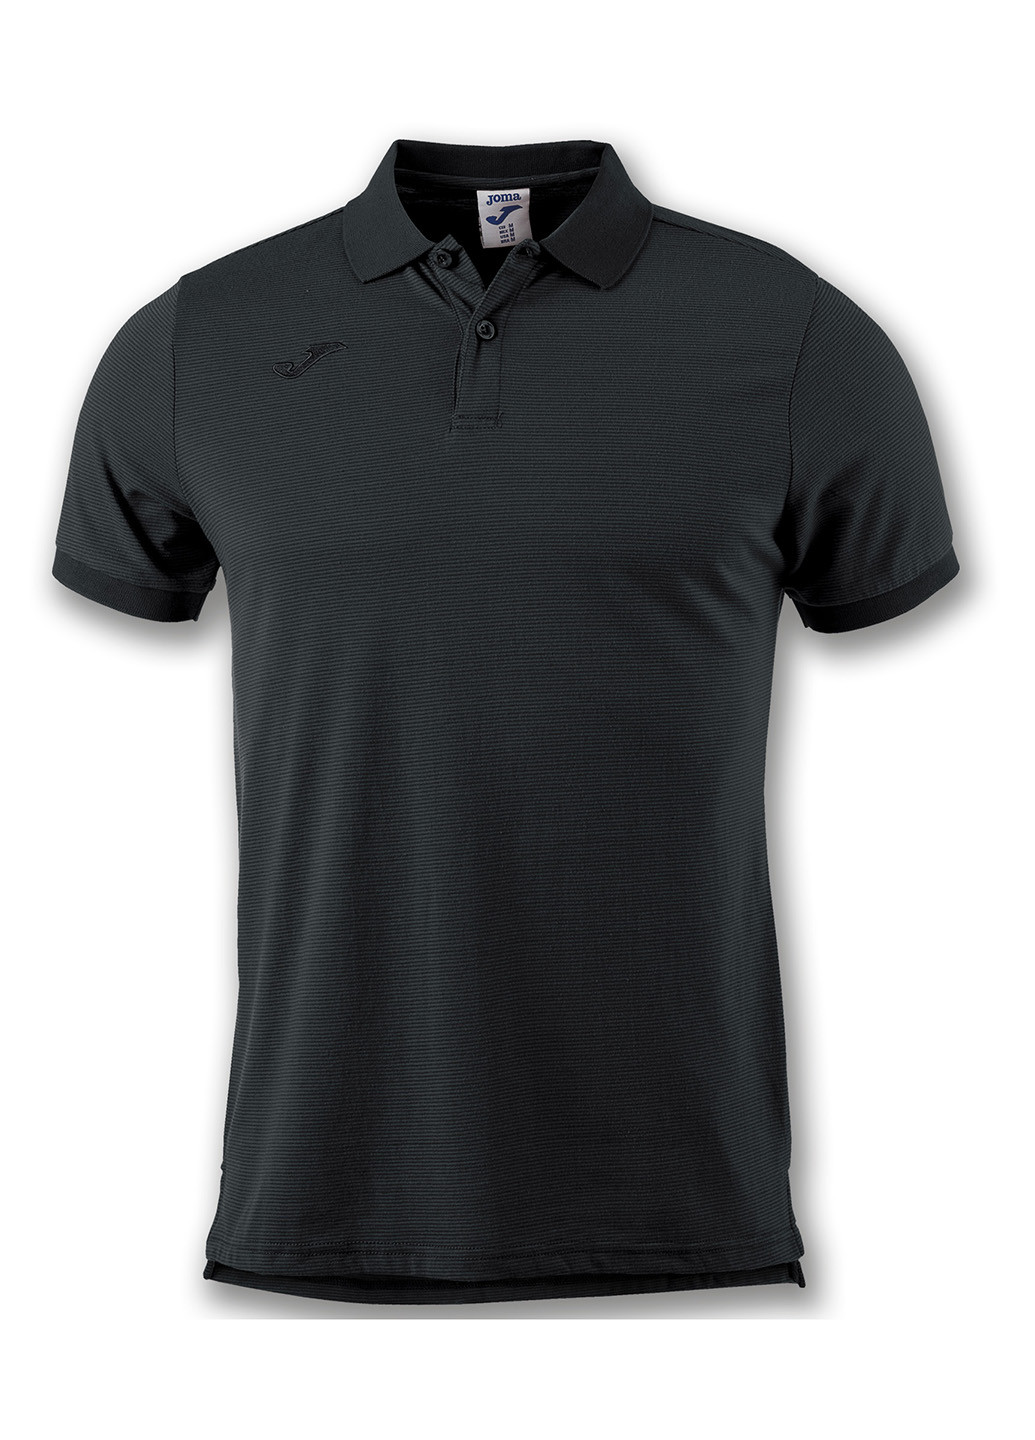 Черная футболка-поло для мужчин Joma однотонная